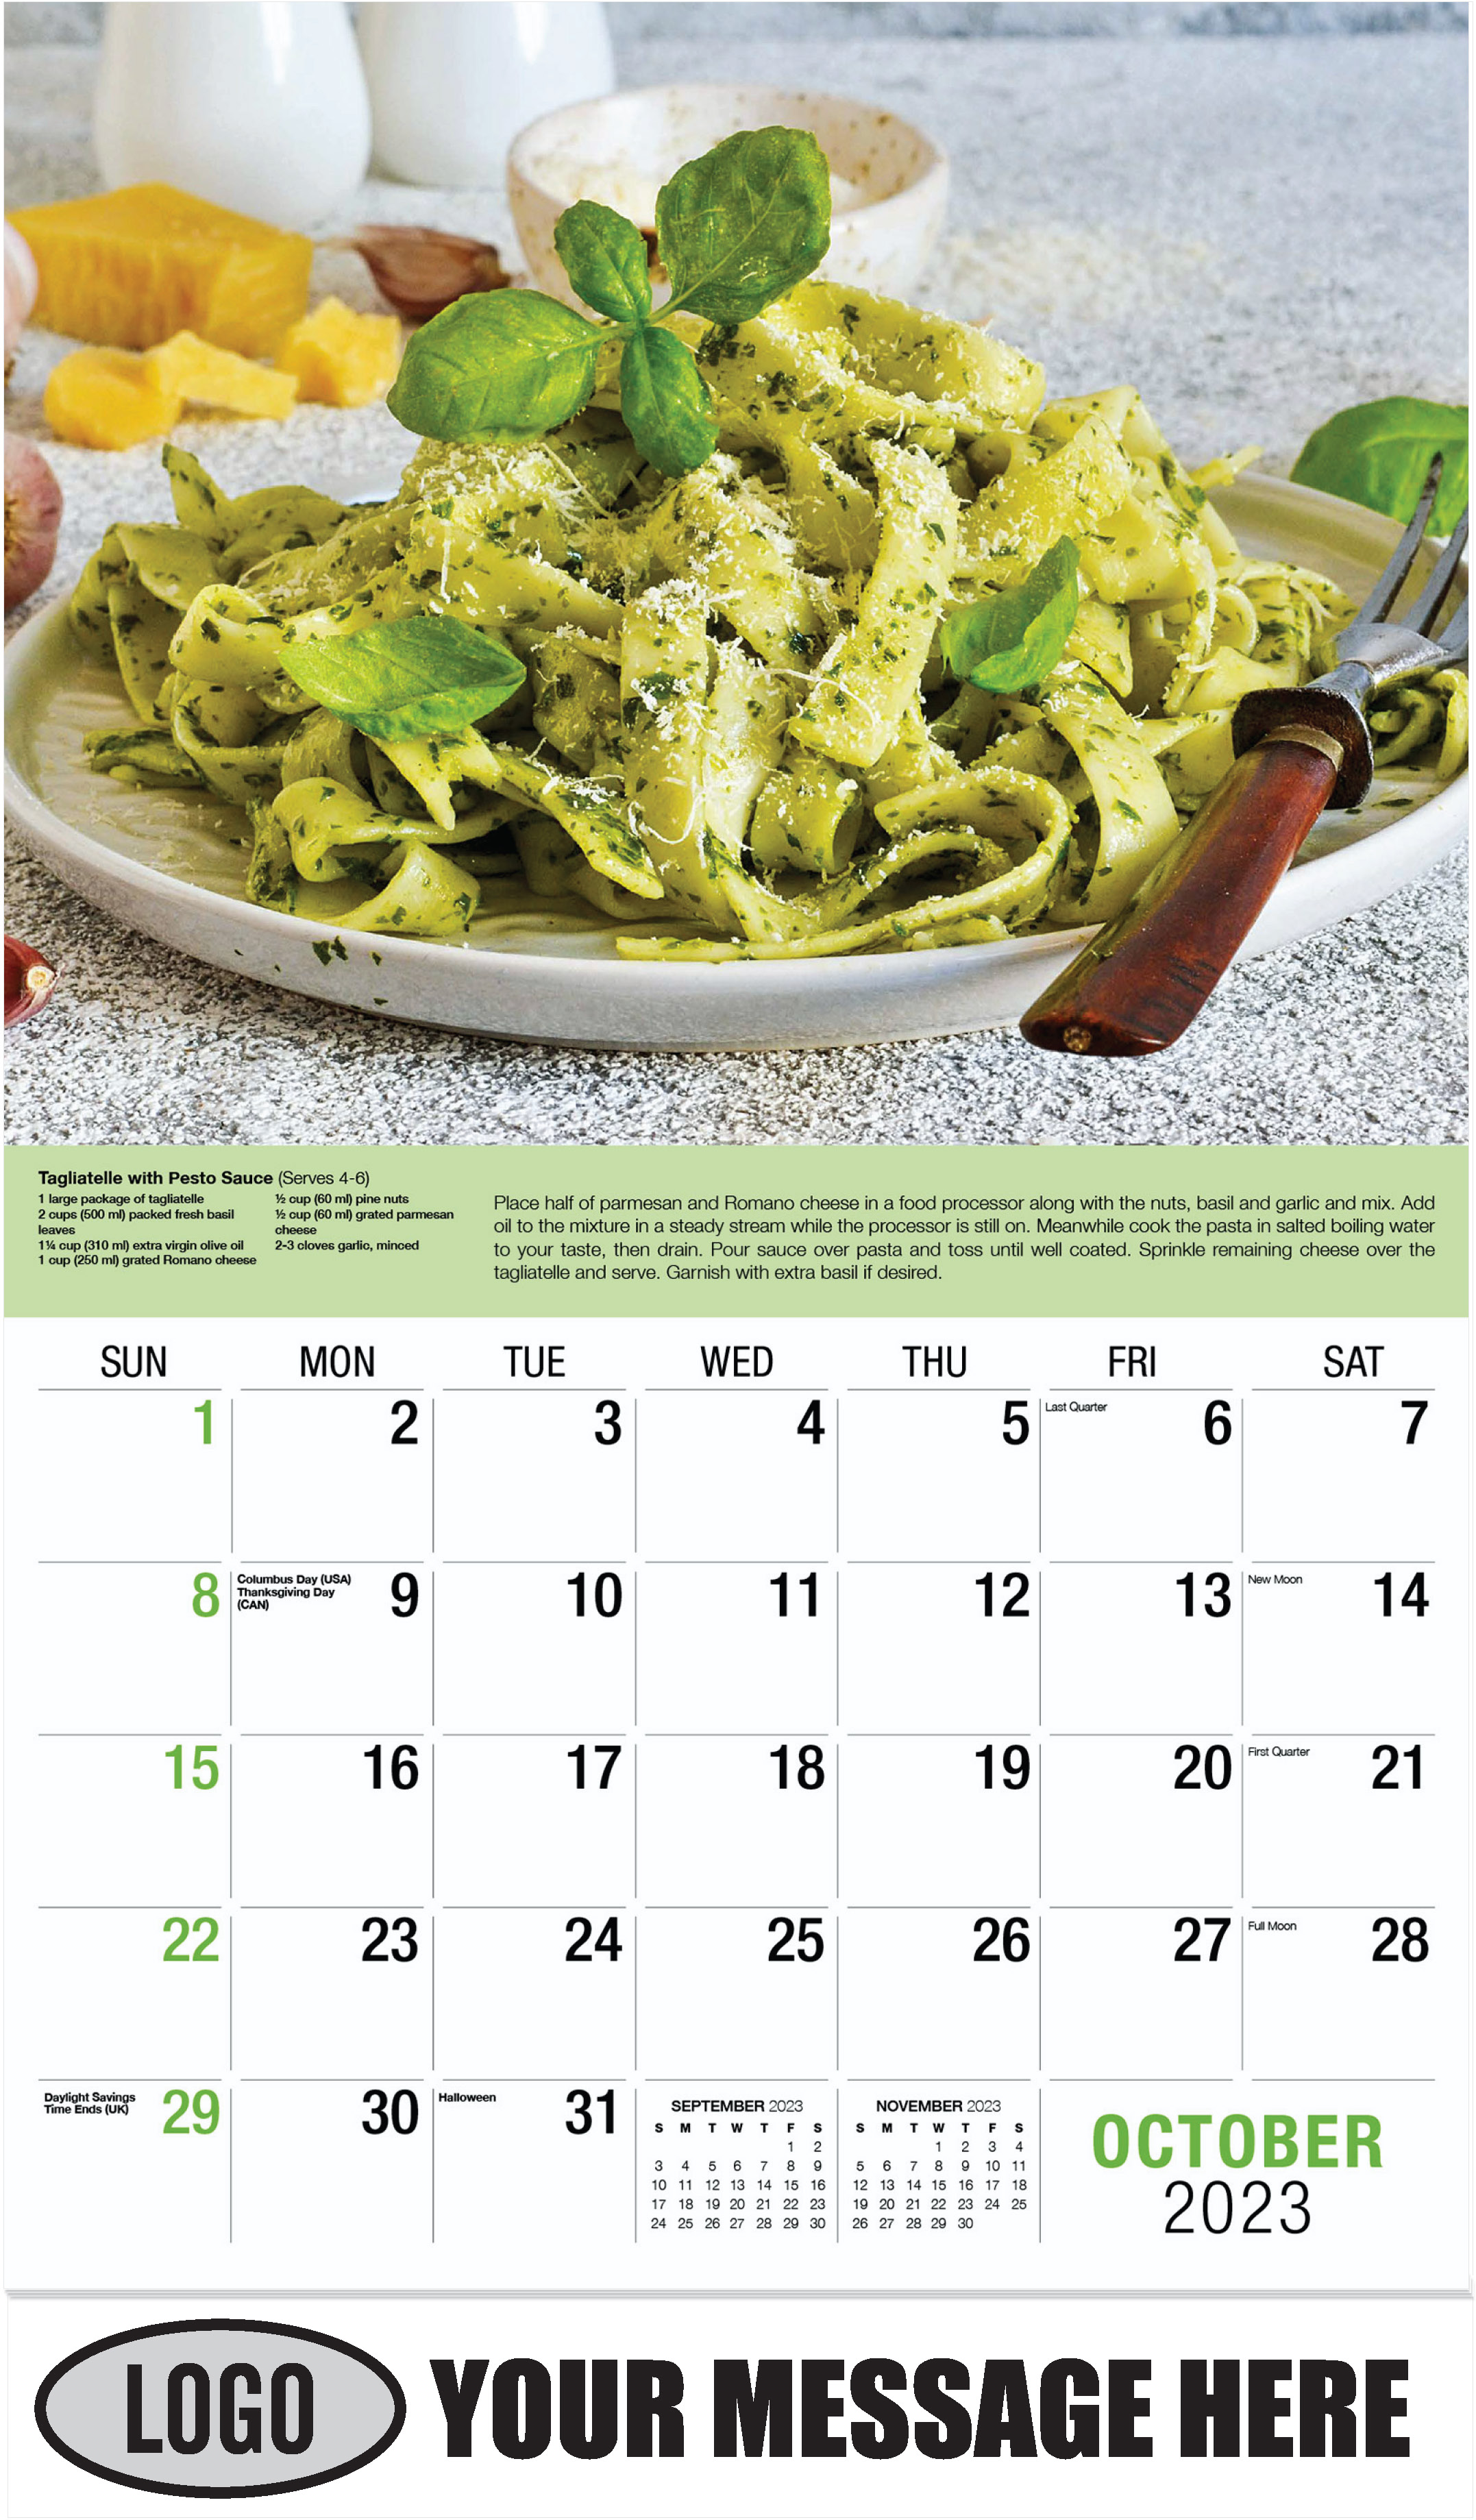 October - Recipes 2023 Promotional Calendar